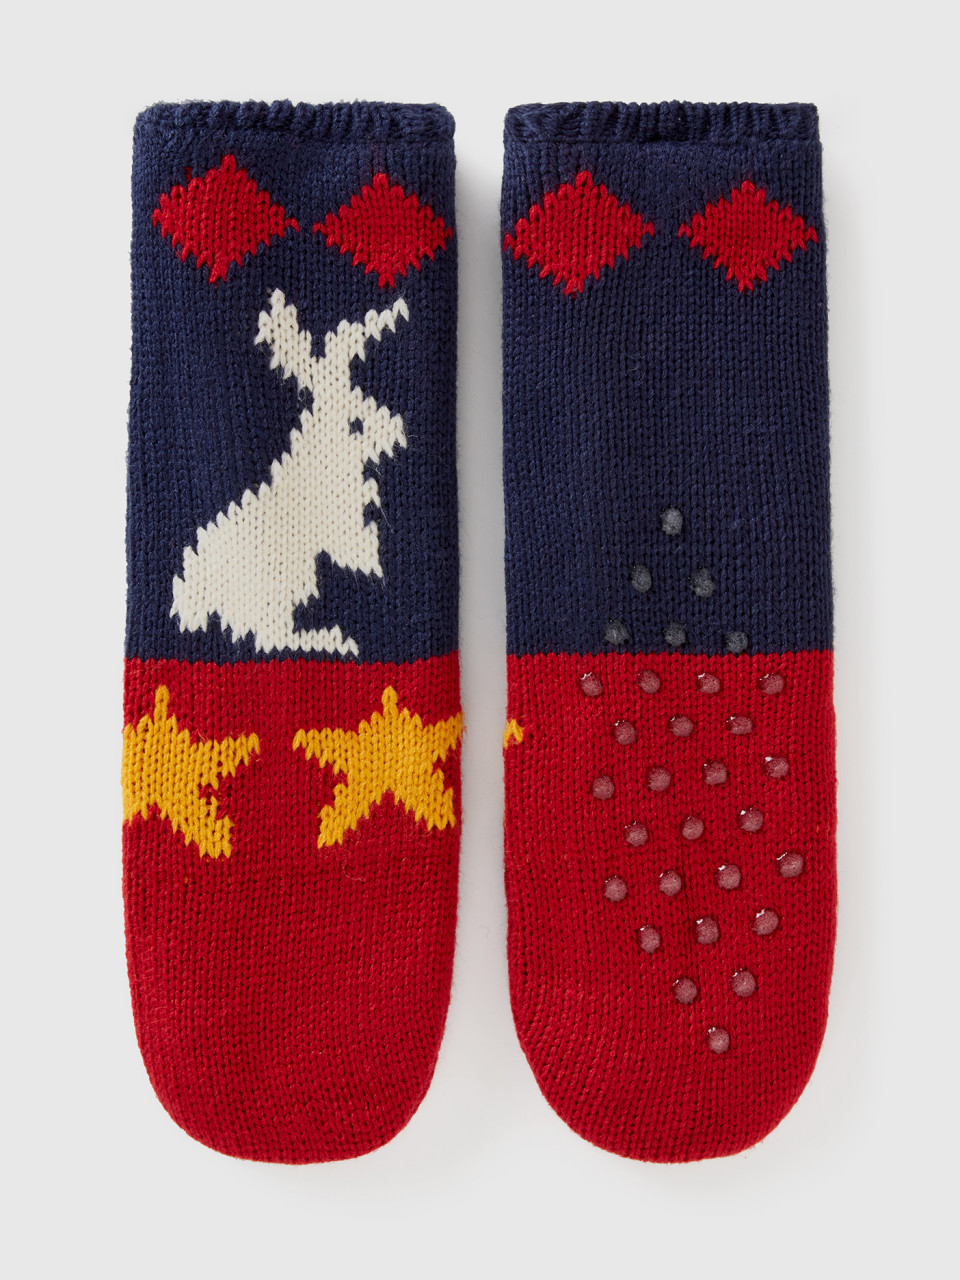 Benetton, Short Patterned Knit Socks, Multi-color, Kids